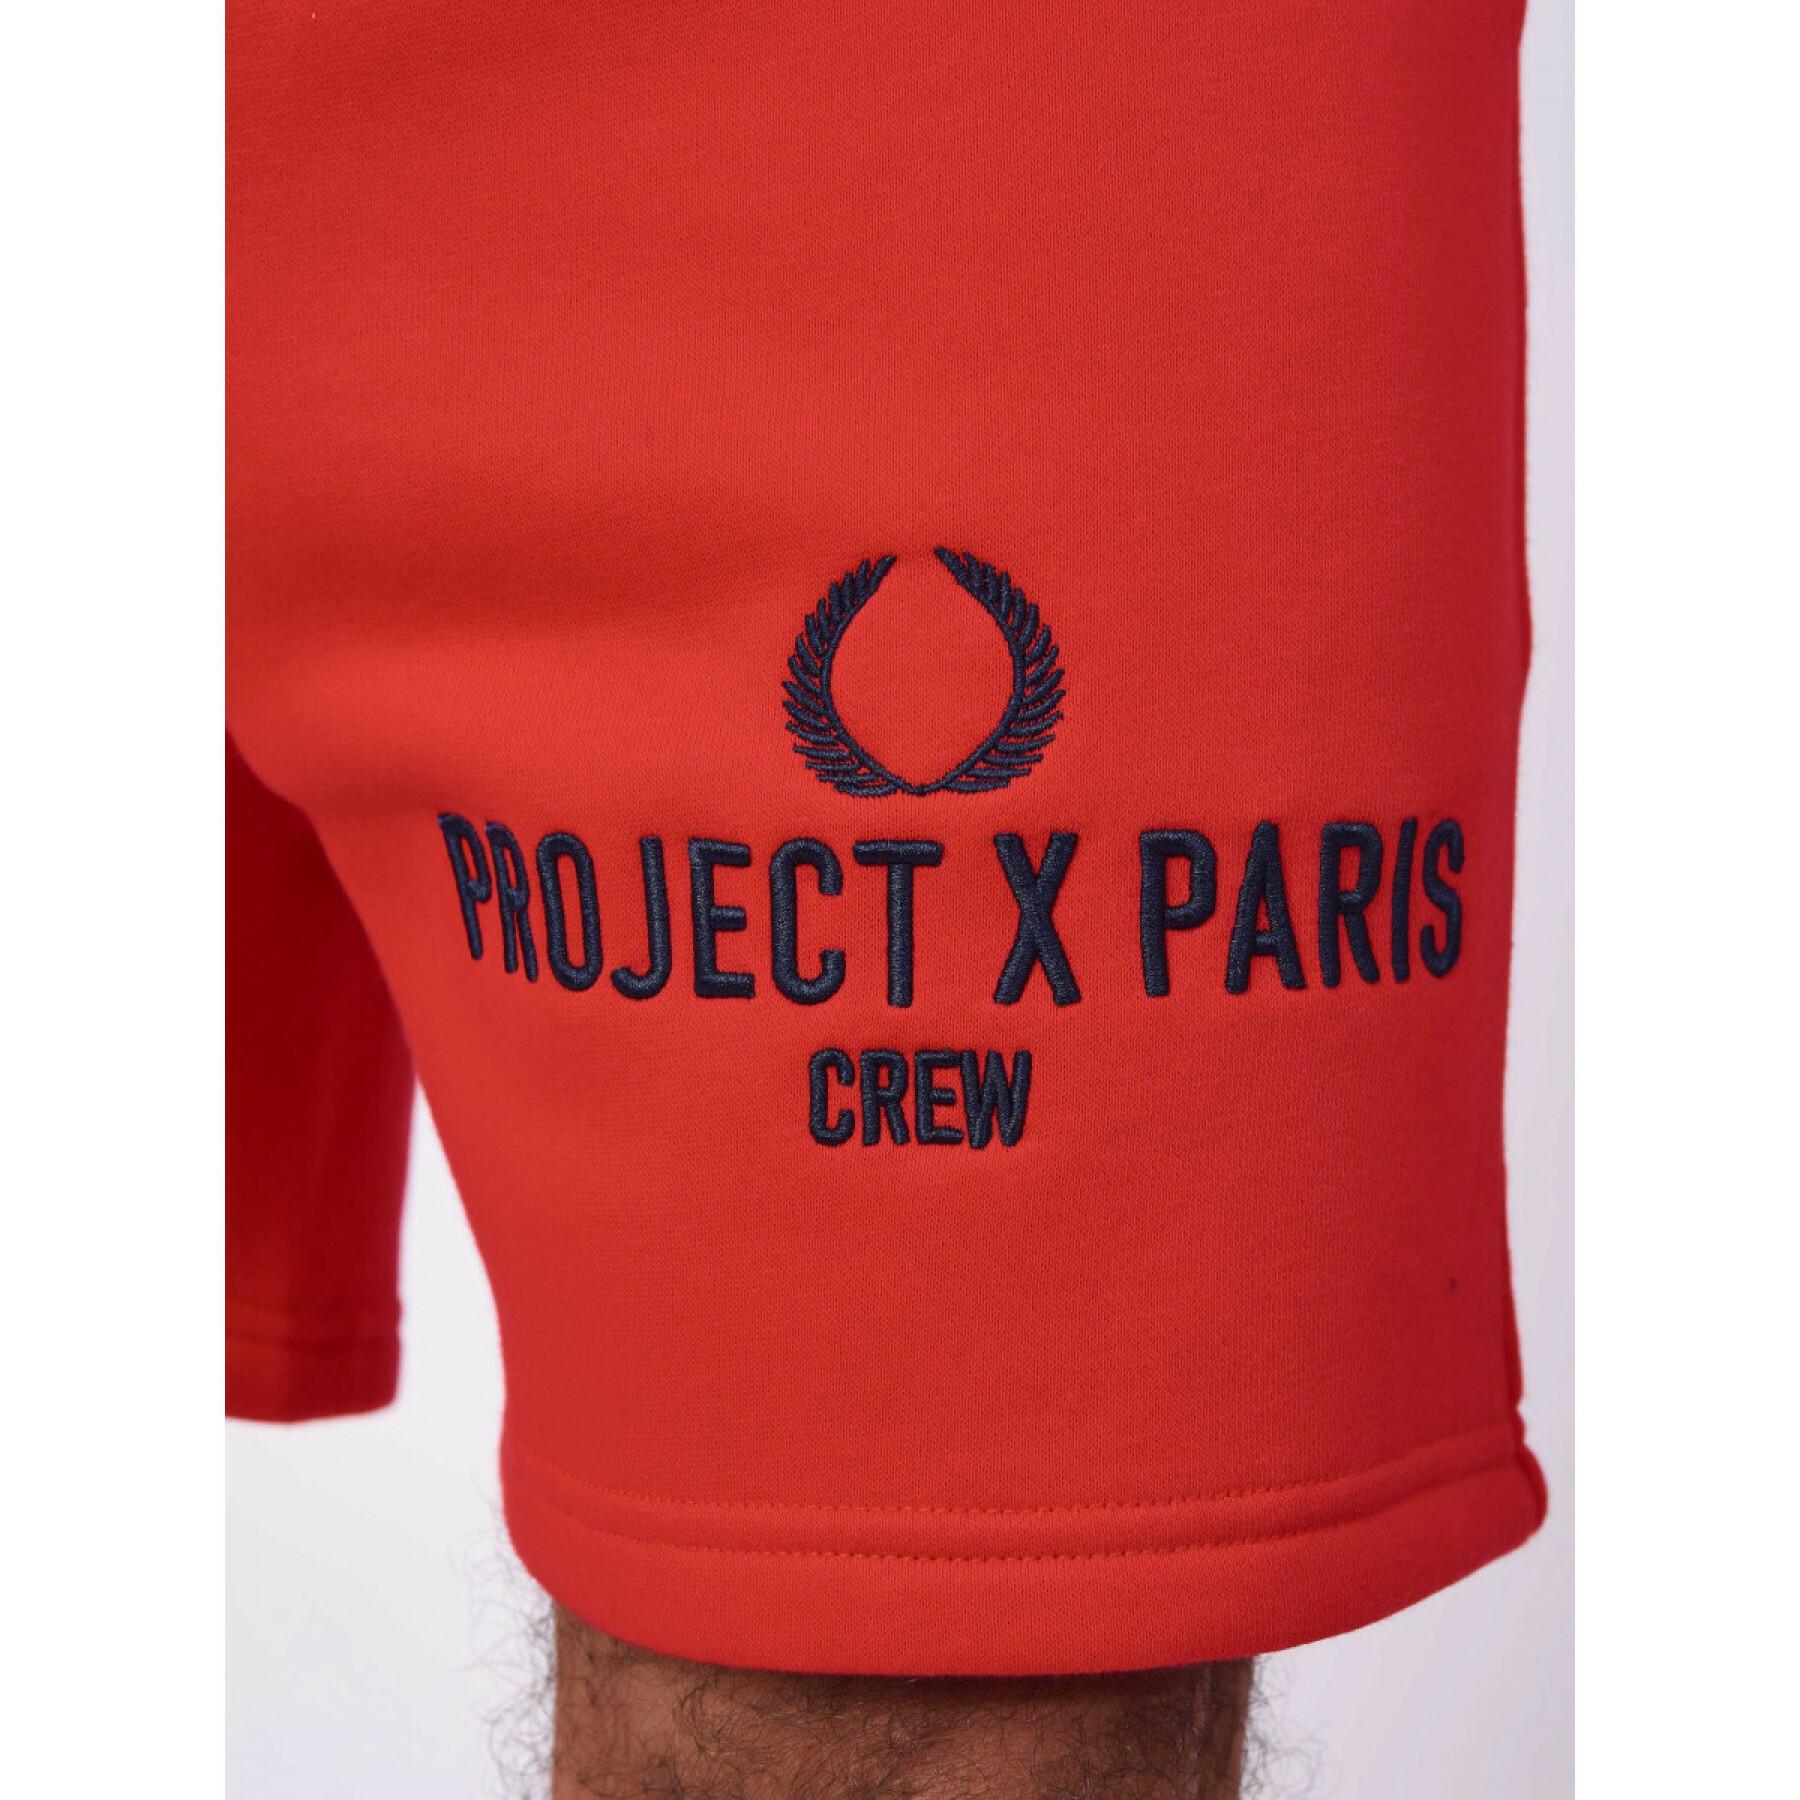 Pantaloncini Project X Paris crew